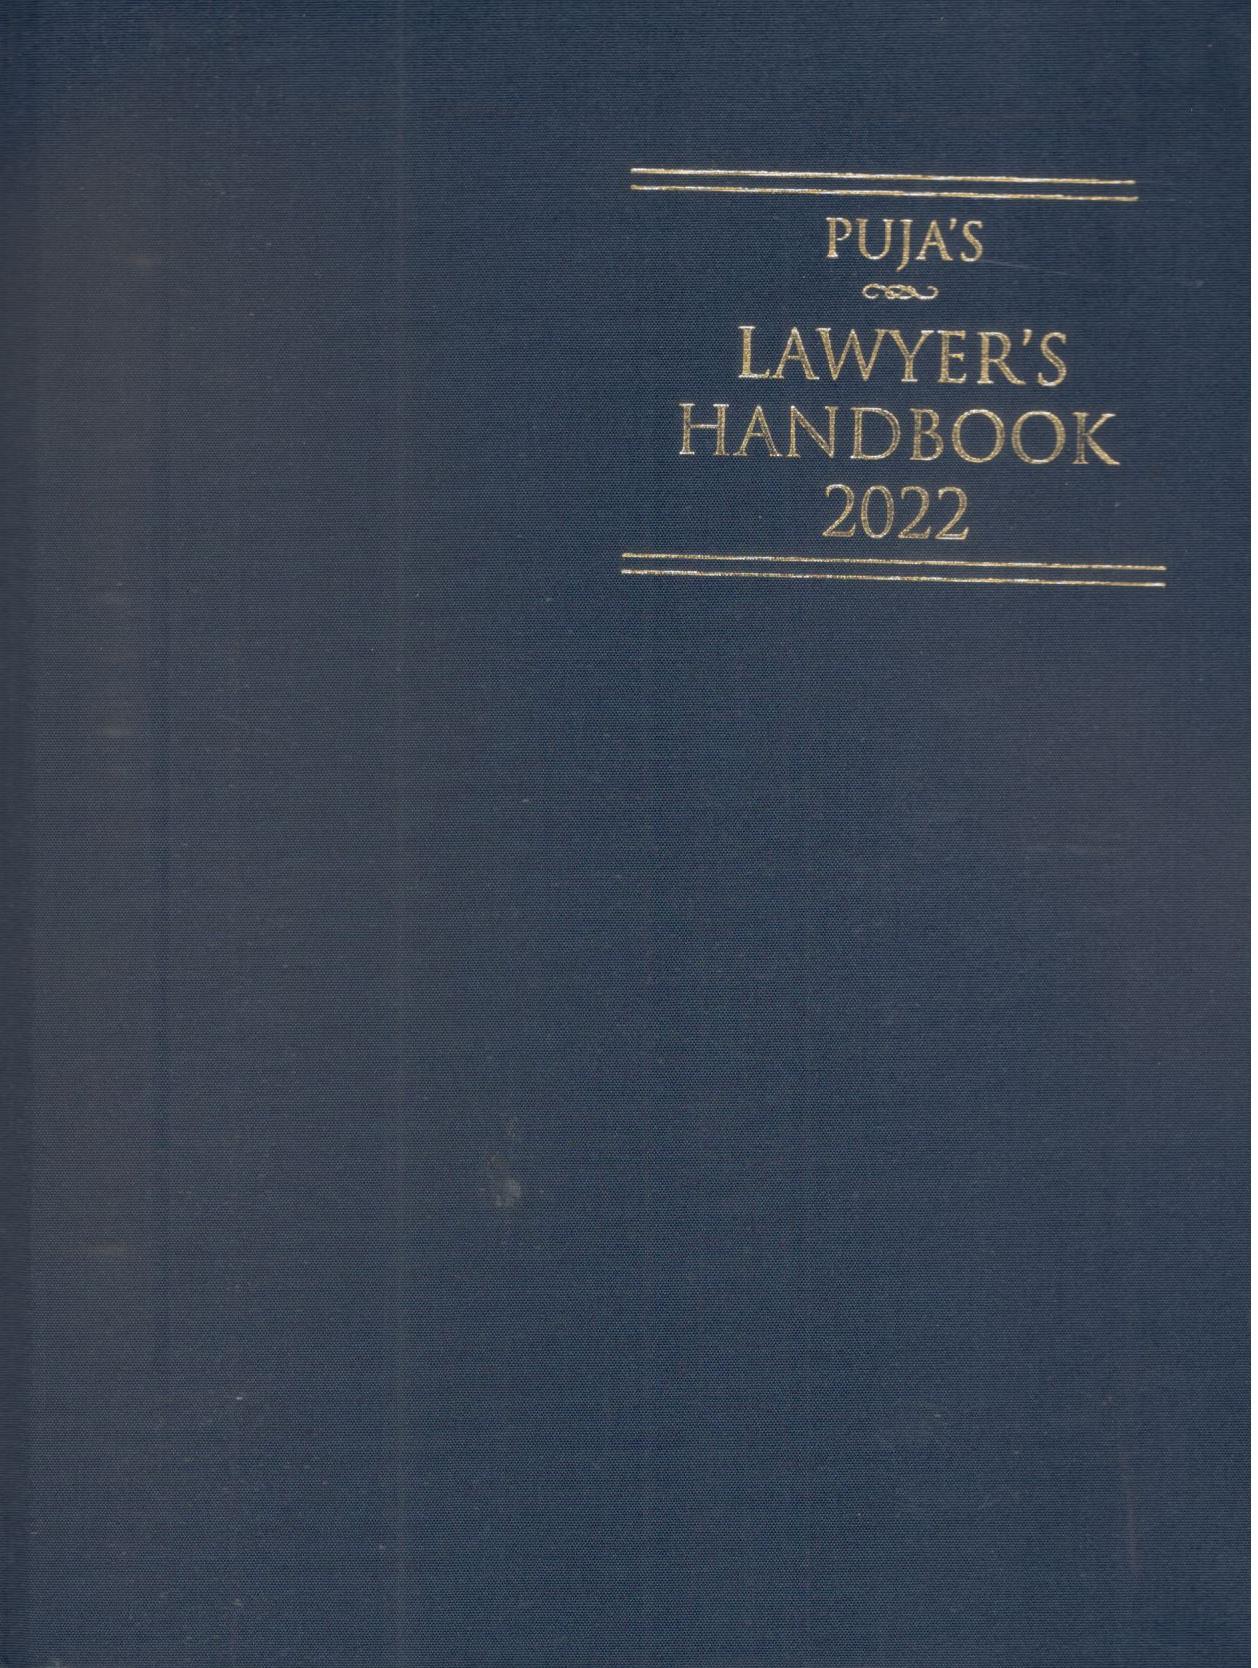  Buy Puja’s Lawyer’s Handbook 2022 - Blue Small Size Regular Hardbound